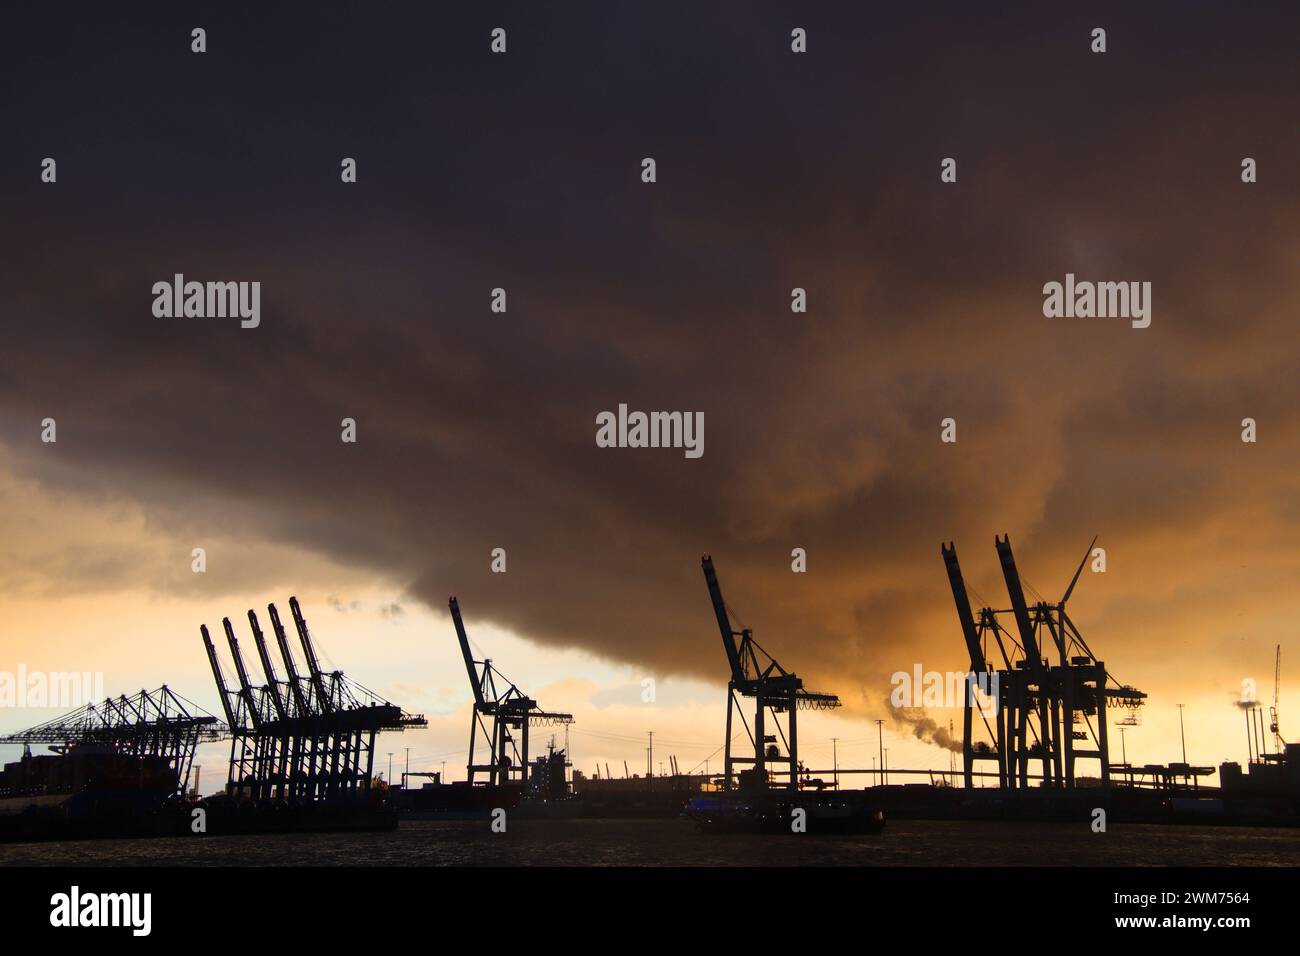 über den Hamburger Hafen zieht eine große und dunkle Wolkenbank. *** Une grande et sombre banque de nuages passe au-dessus du port de Hambourg Banque D'Images